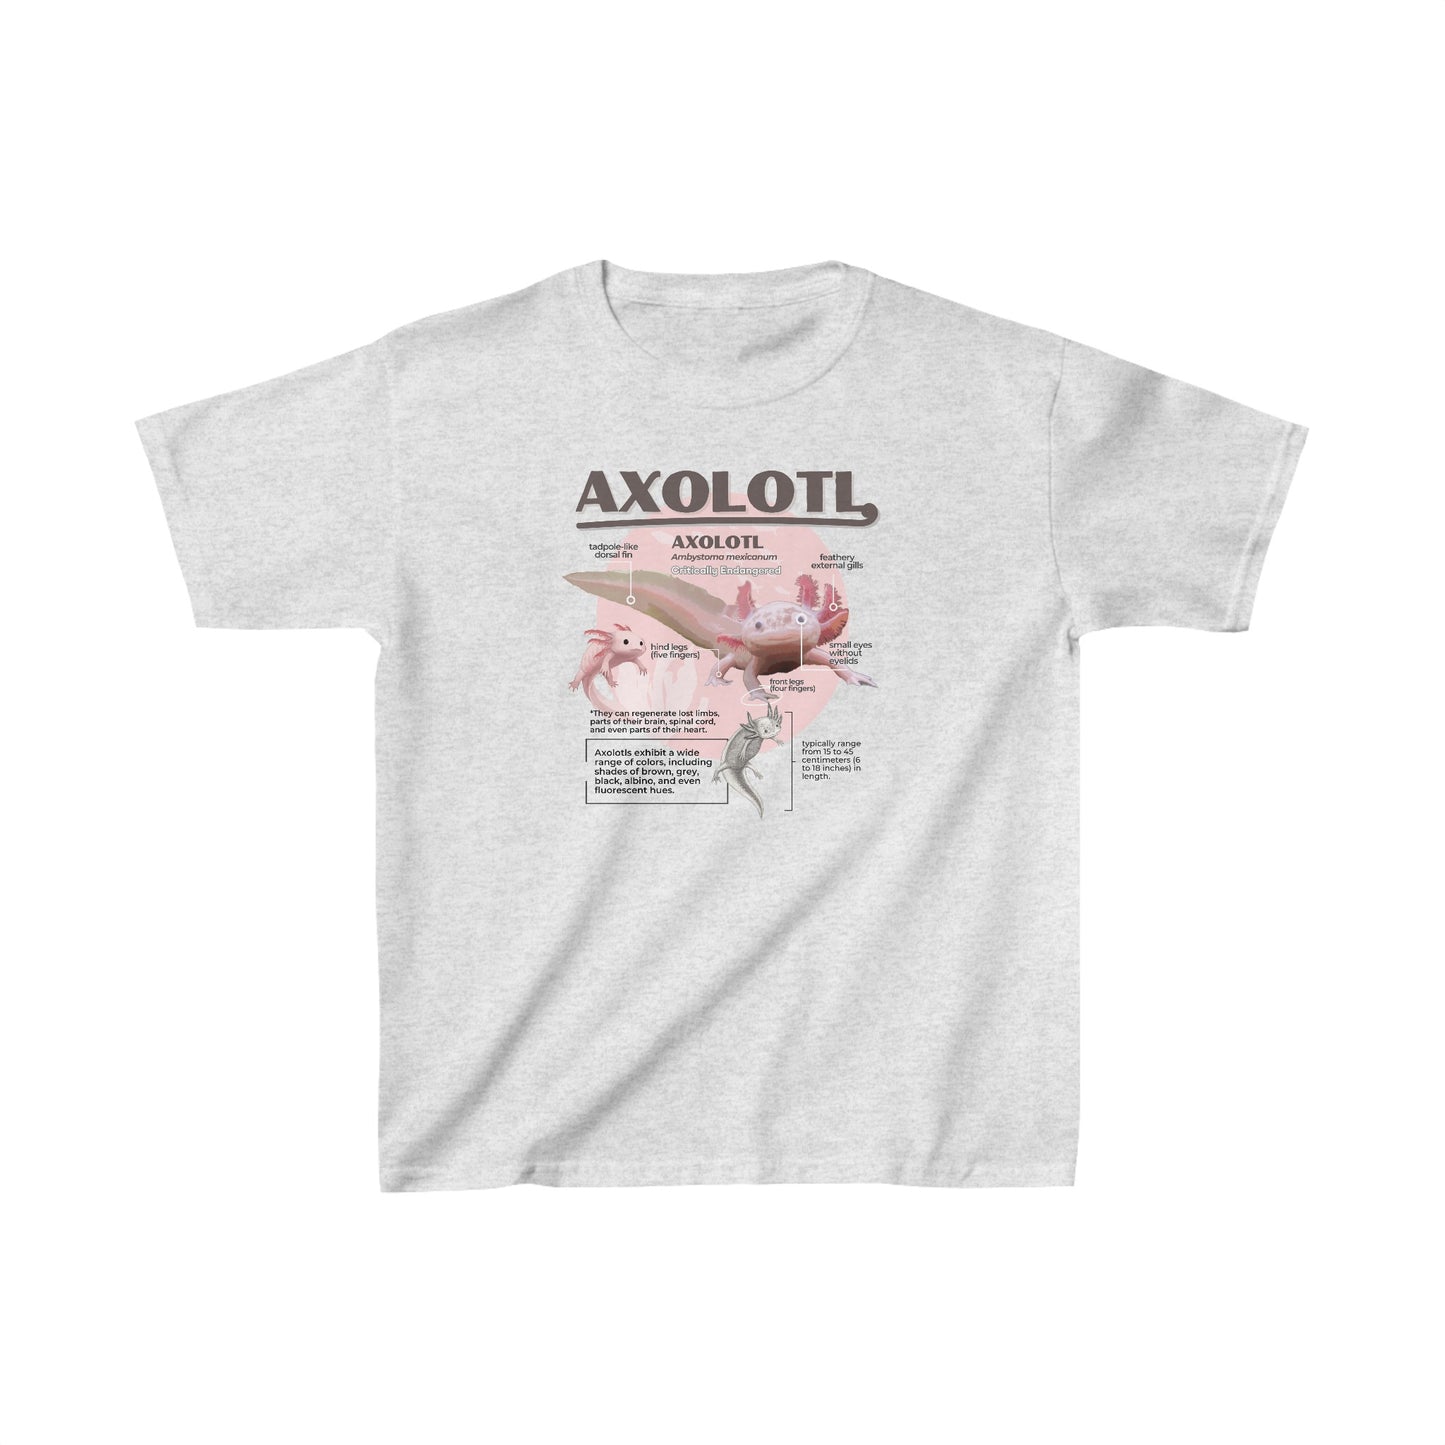 Axolotl Tshirt